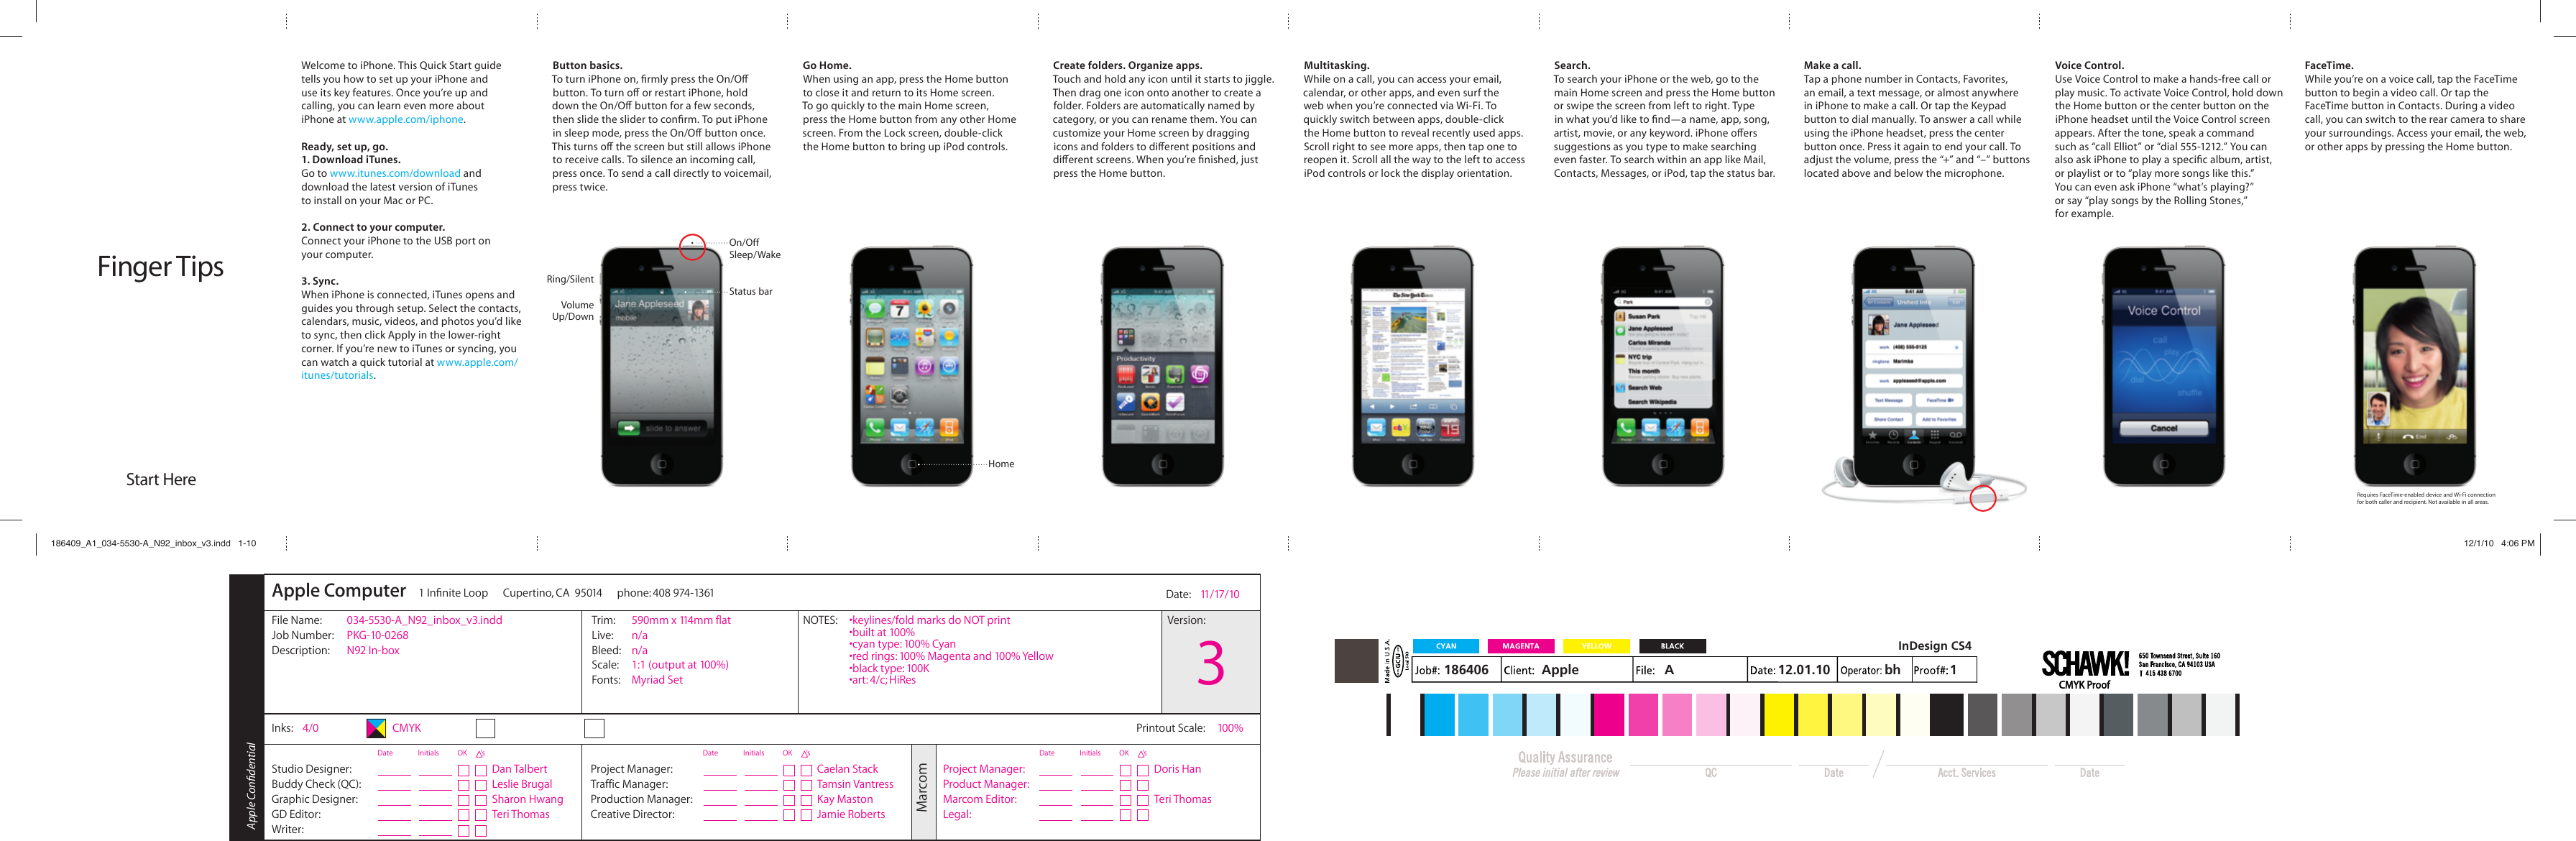 Page 1 of 2 - Apple Apple-Iphone-4-Cdma-Quick-Start-Manual- 186409_A1_034-5530-A_N92_inbox_v3  Apple-iphone-4-cdma-quick-start-manual